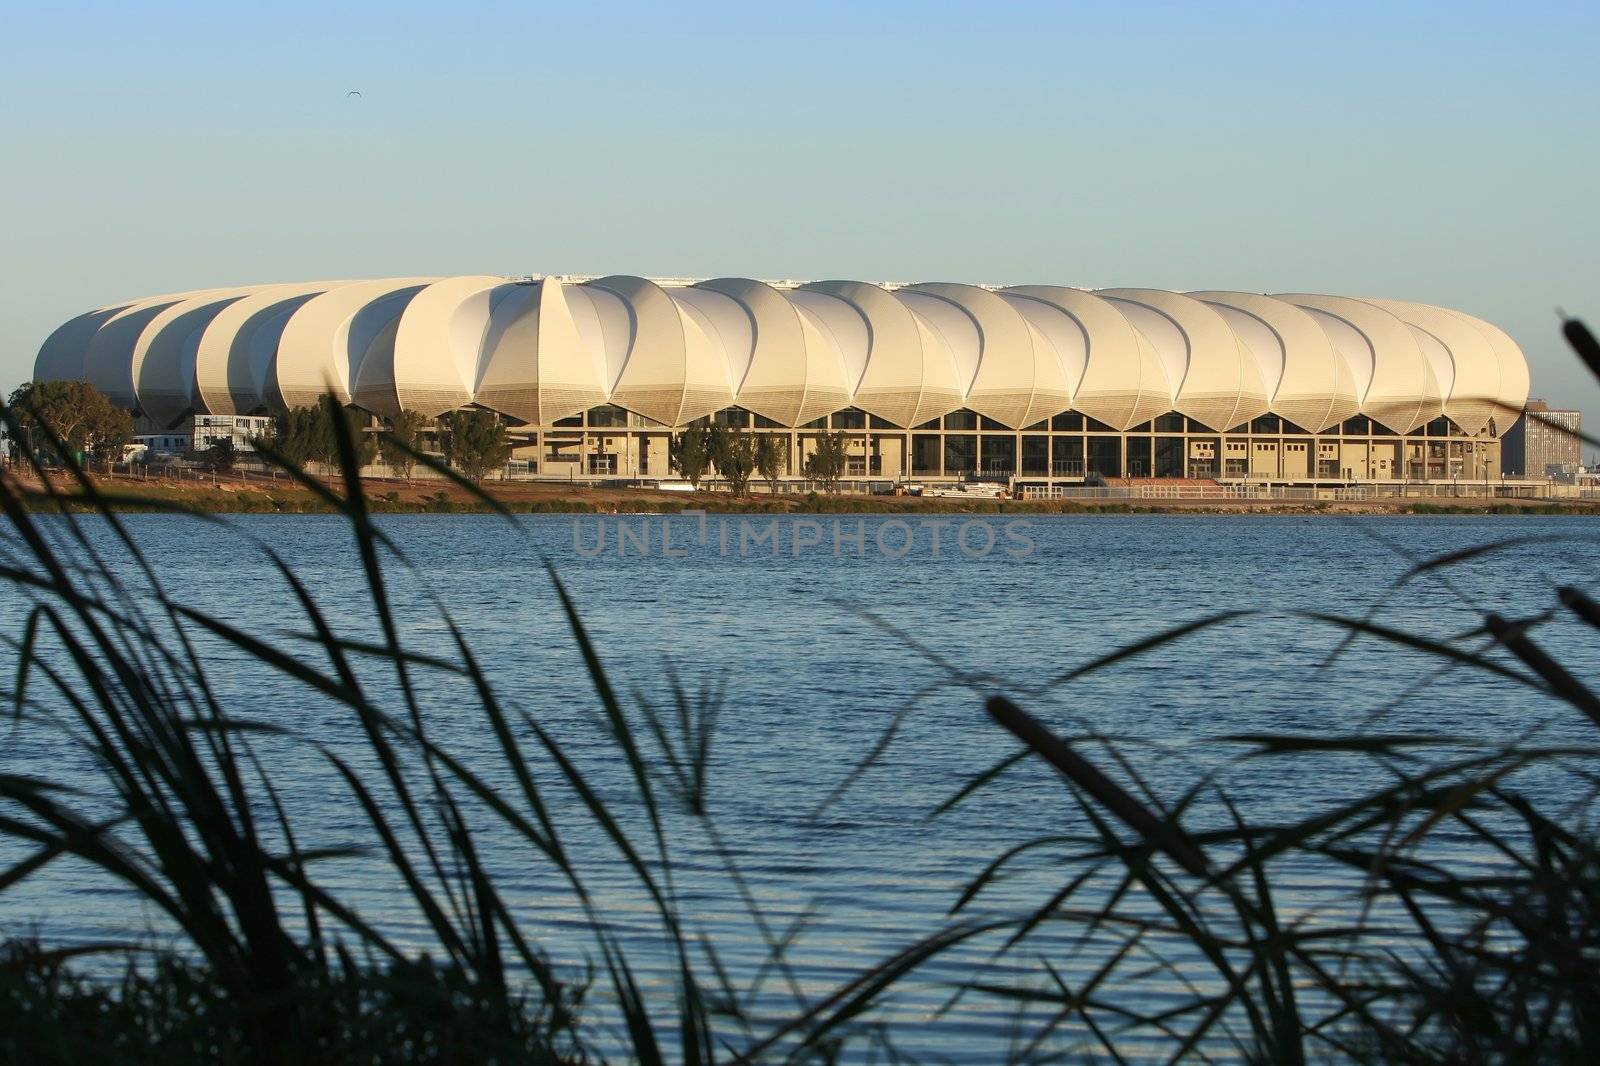 Soccer Stadium, Port Elizabeth, South Africa by fouroaks